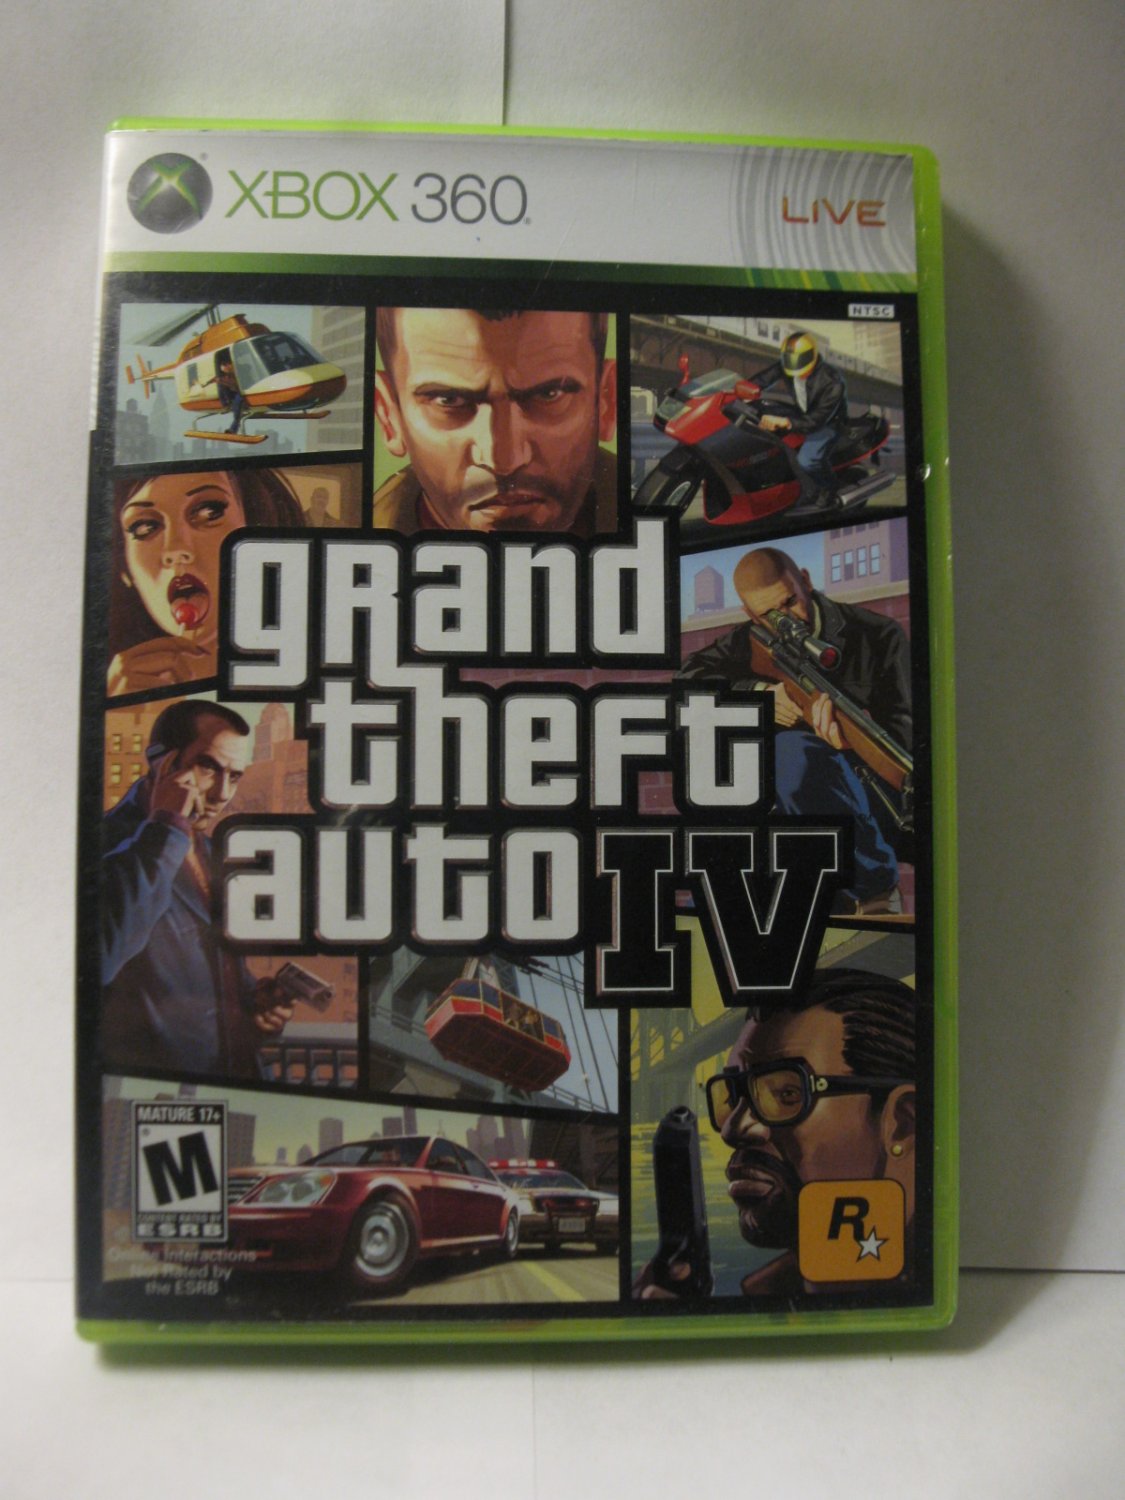 Xbox 360 Video Game: Grand Theft Auto IV